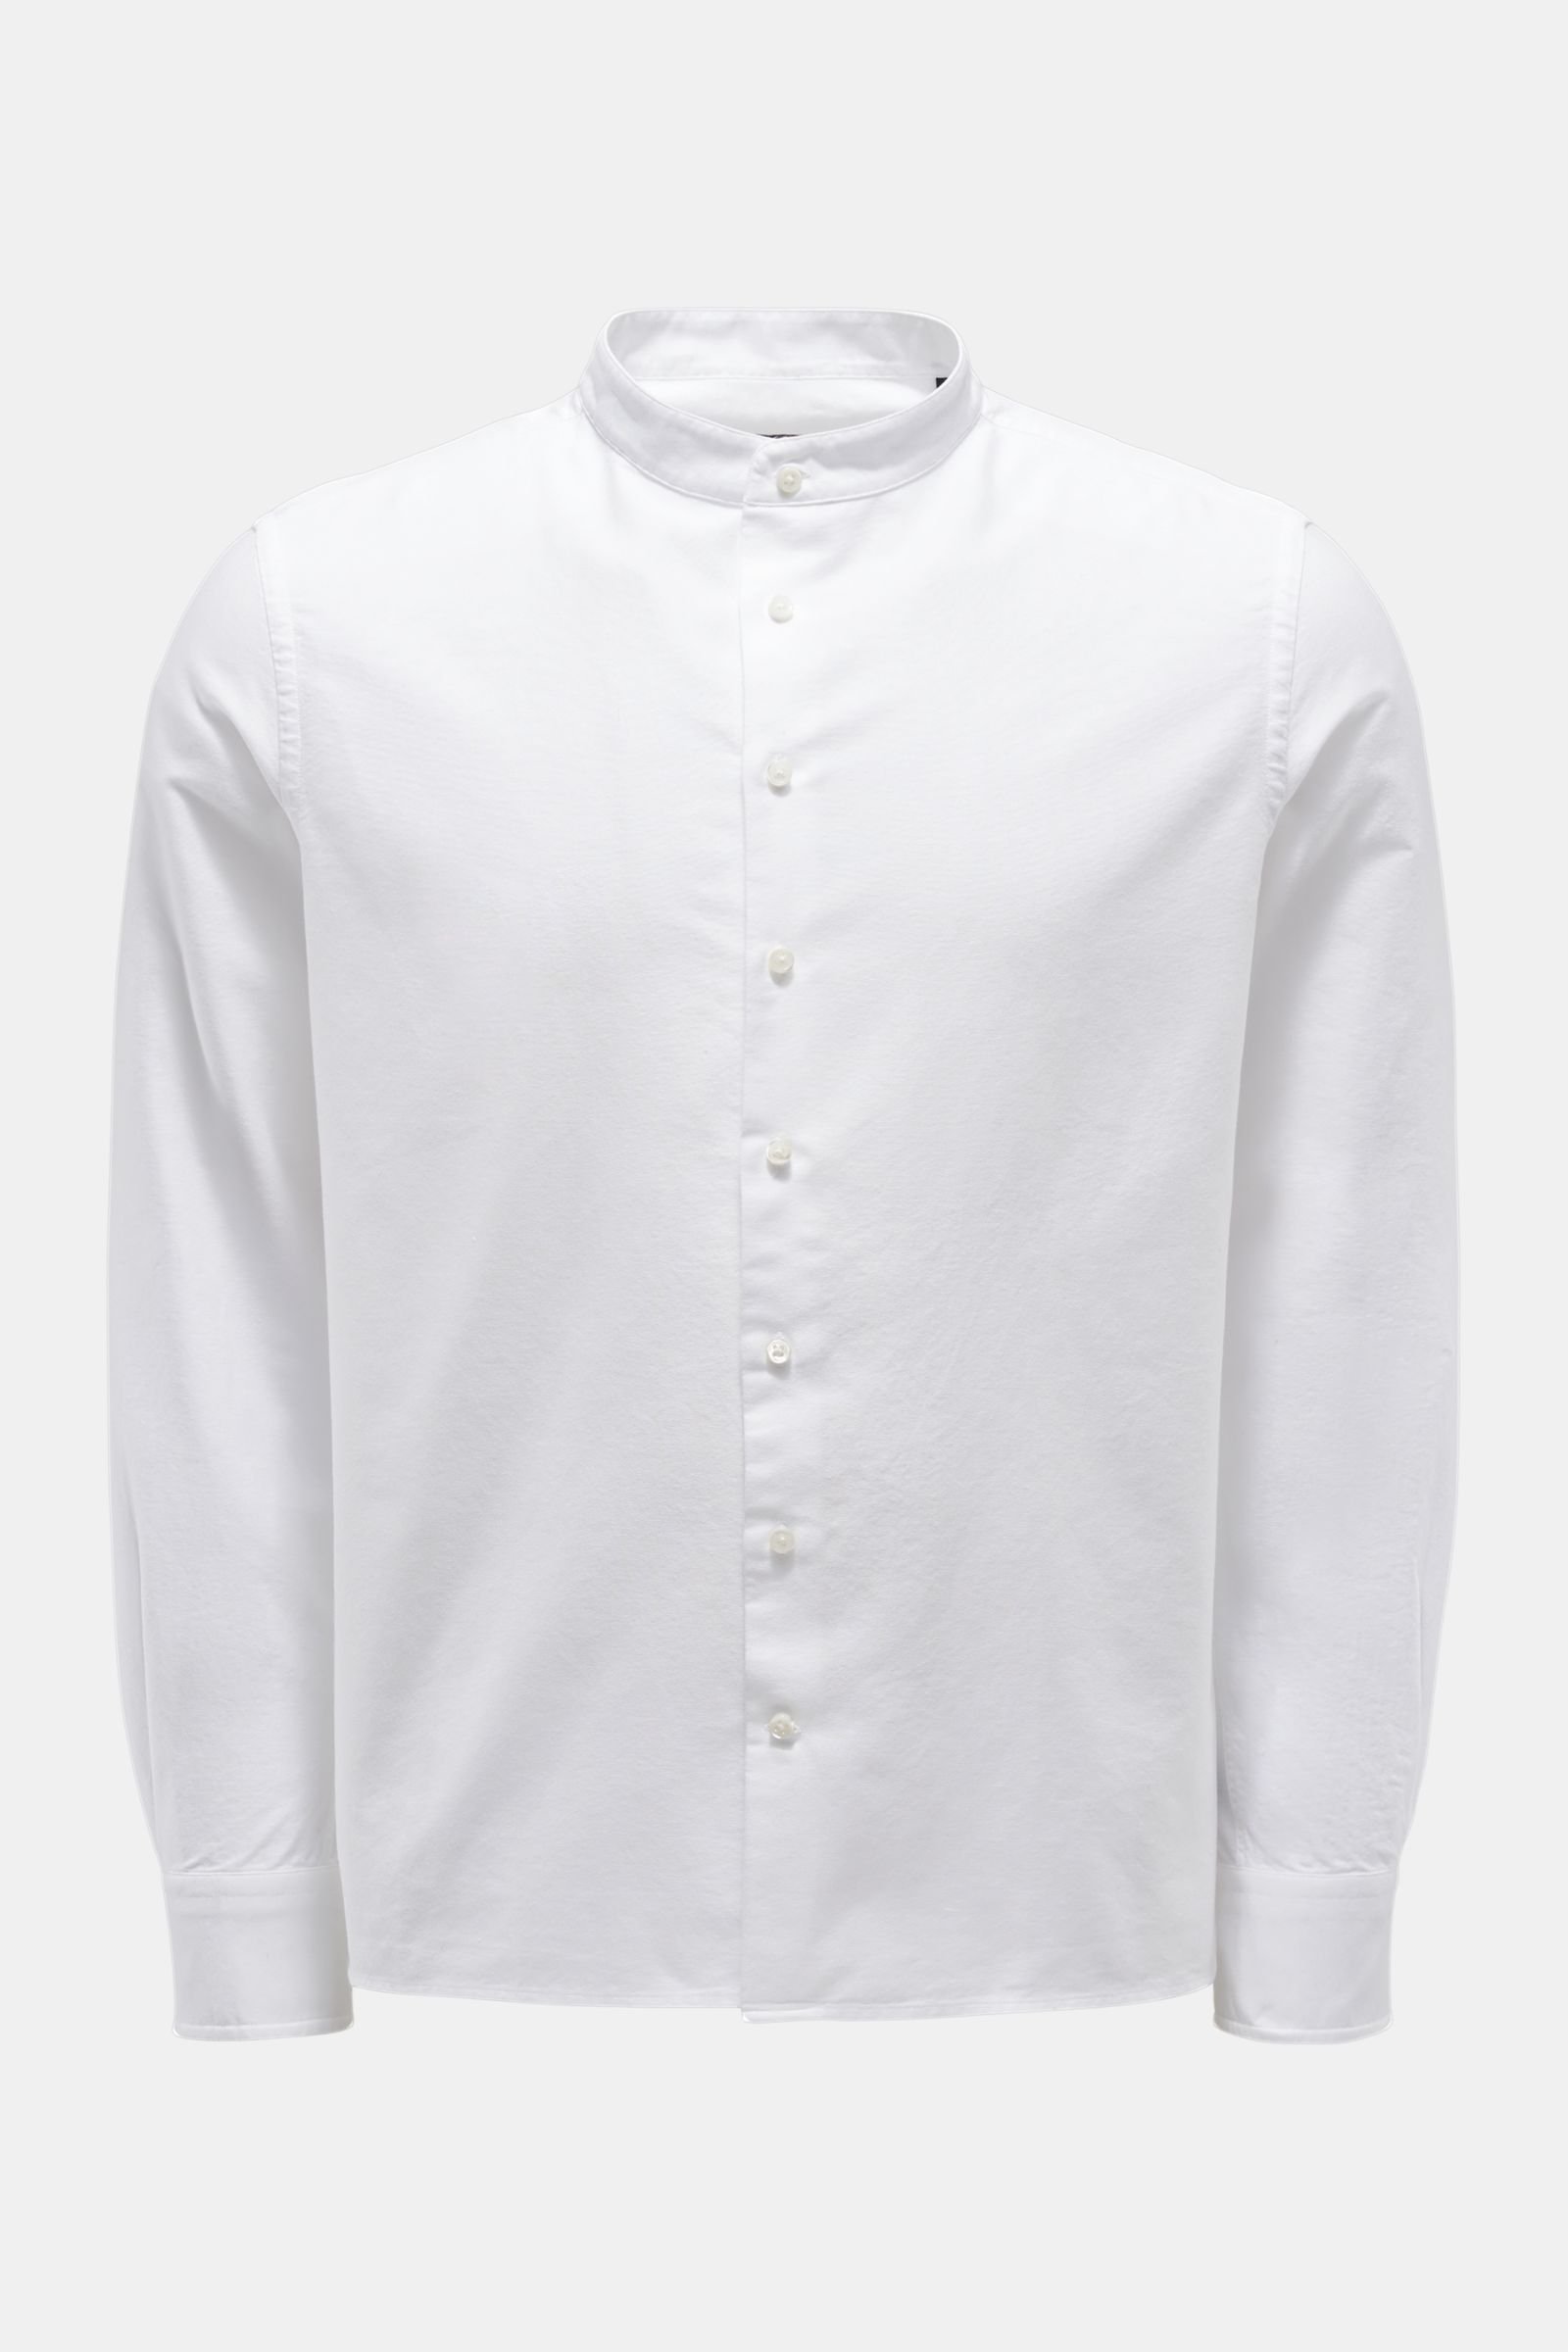 Oxford shirt granddad collar white